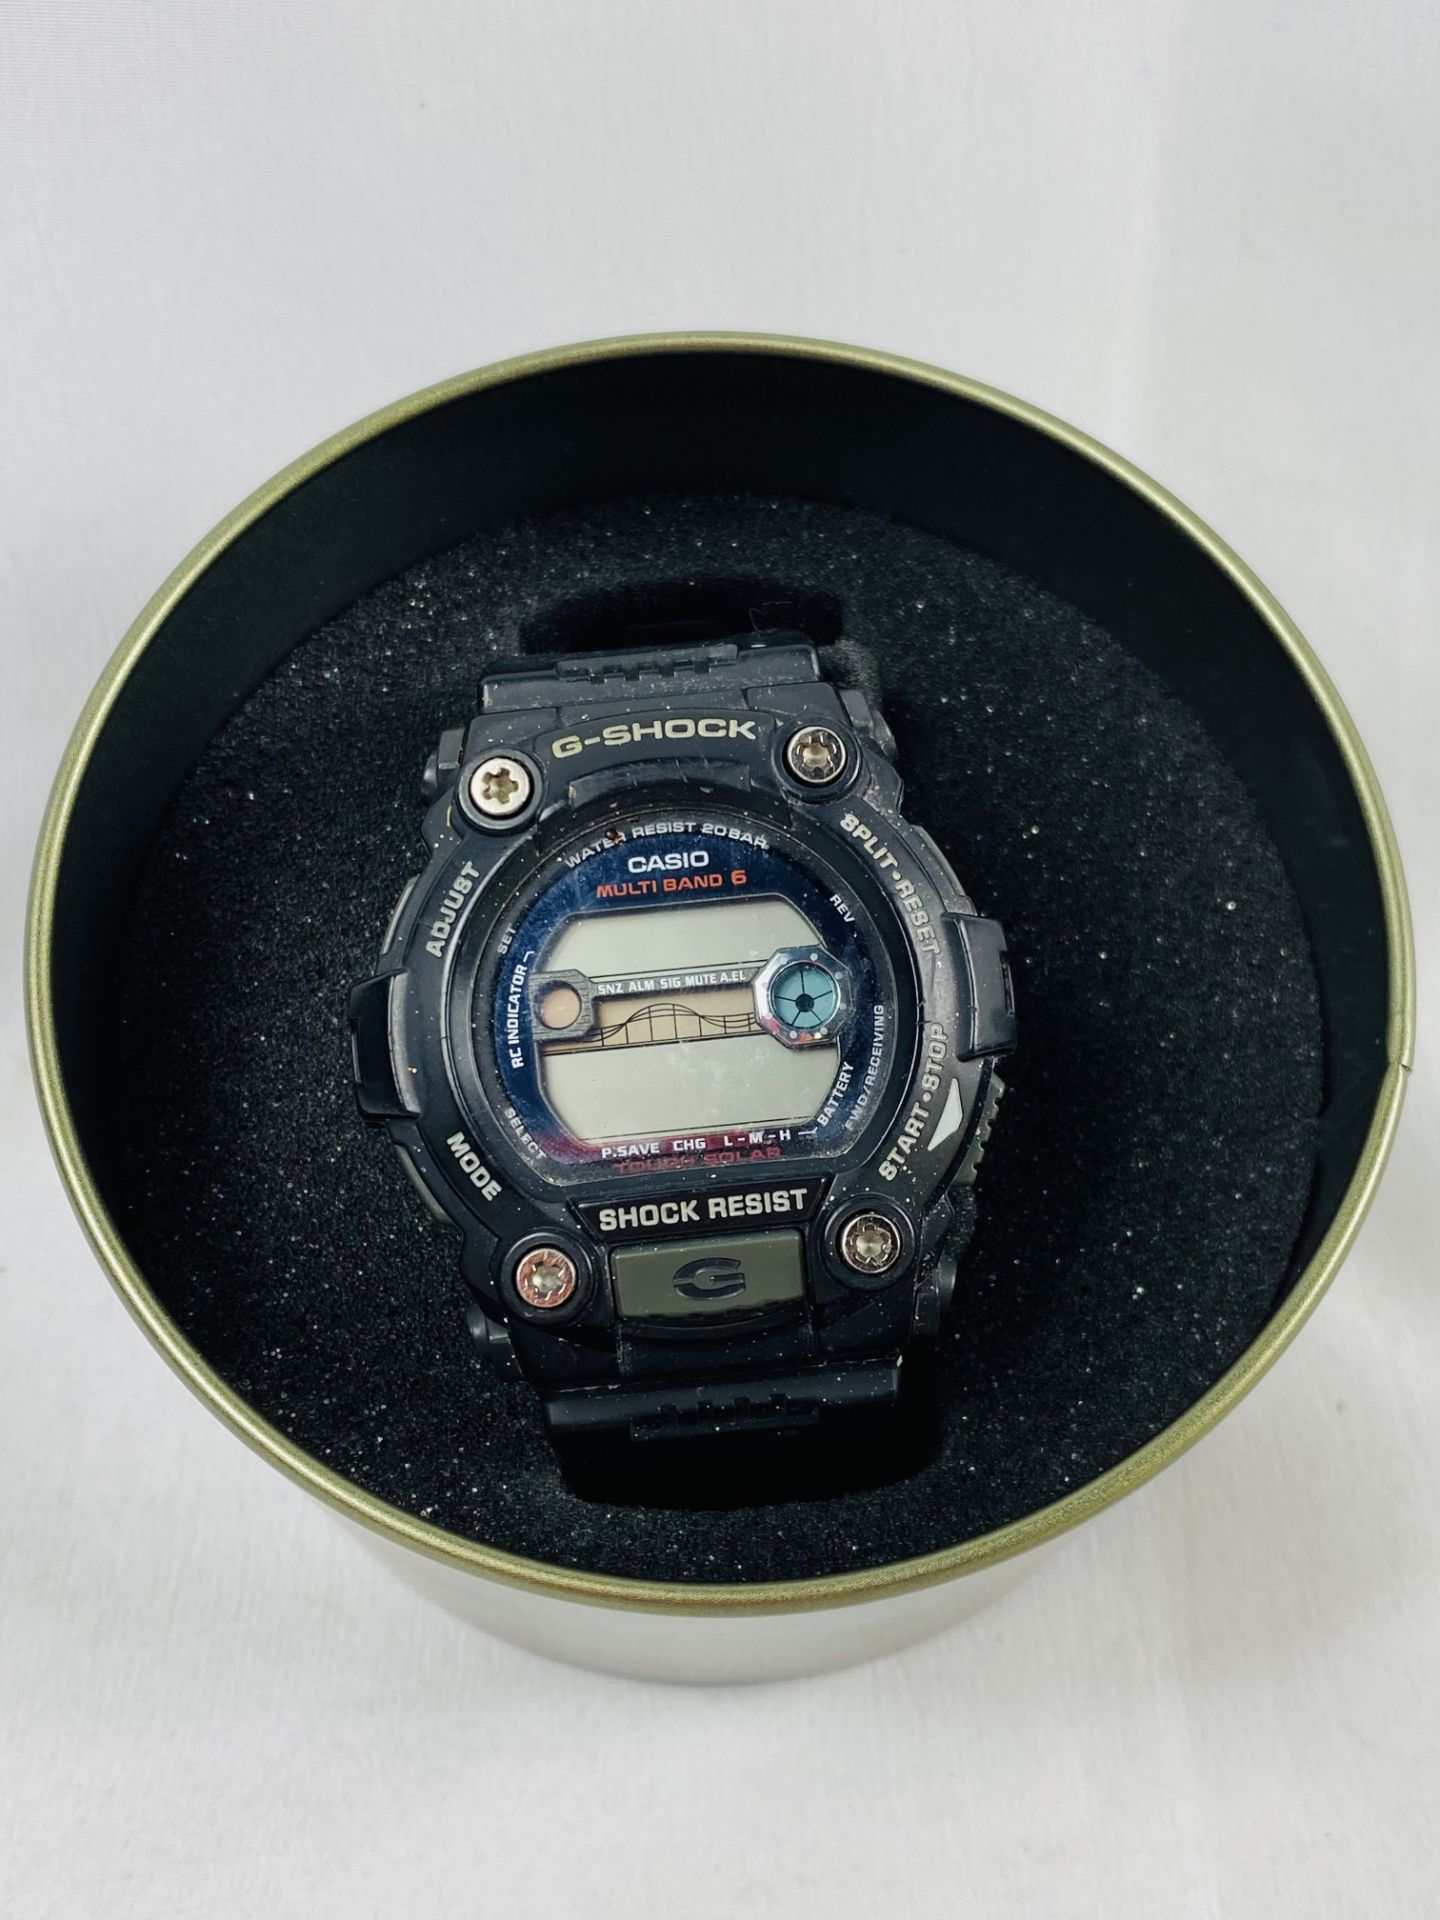 Casio G Shock watch together with six other watches - Bild 3 aus 6